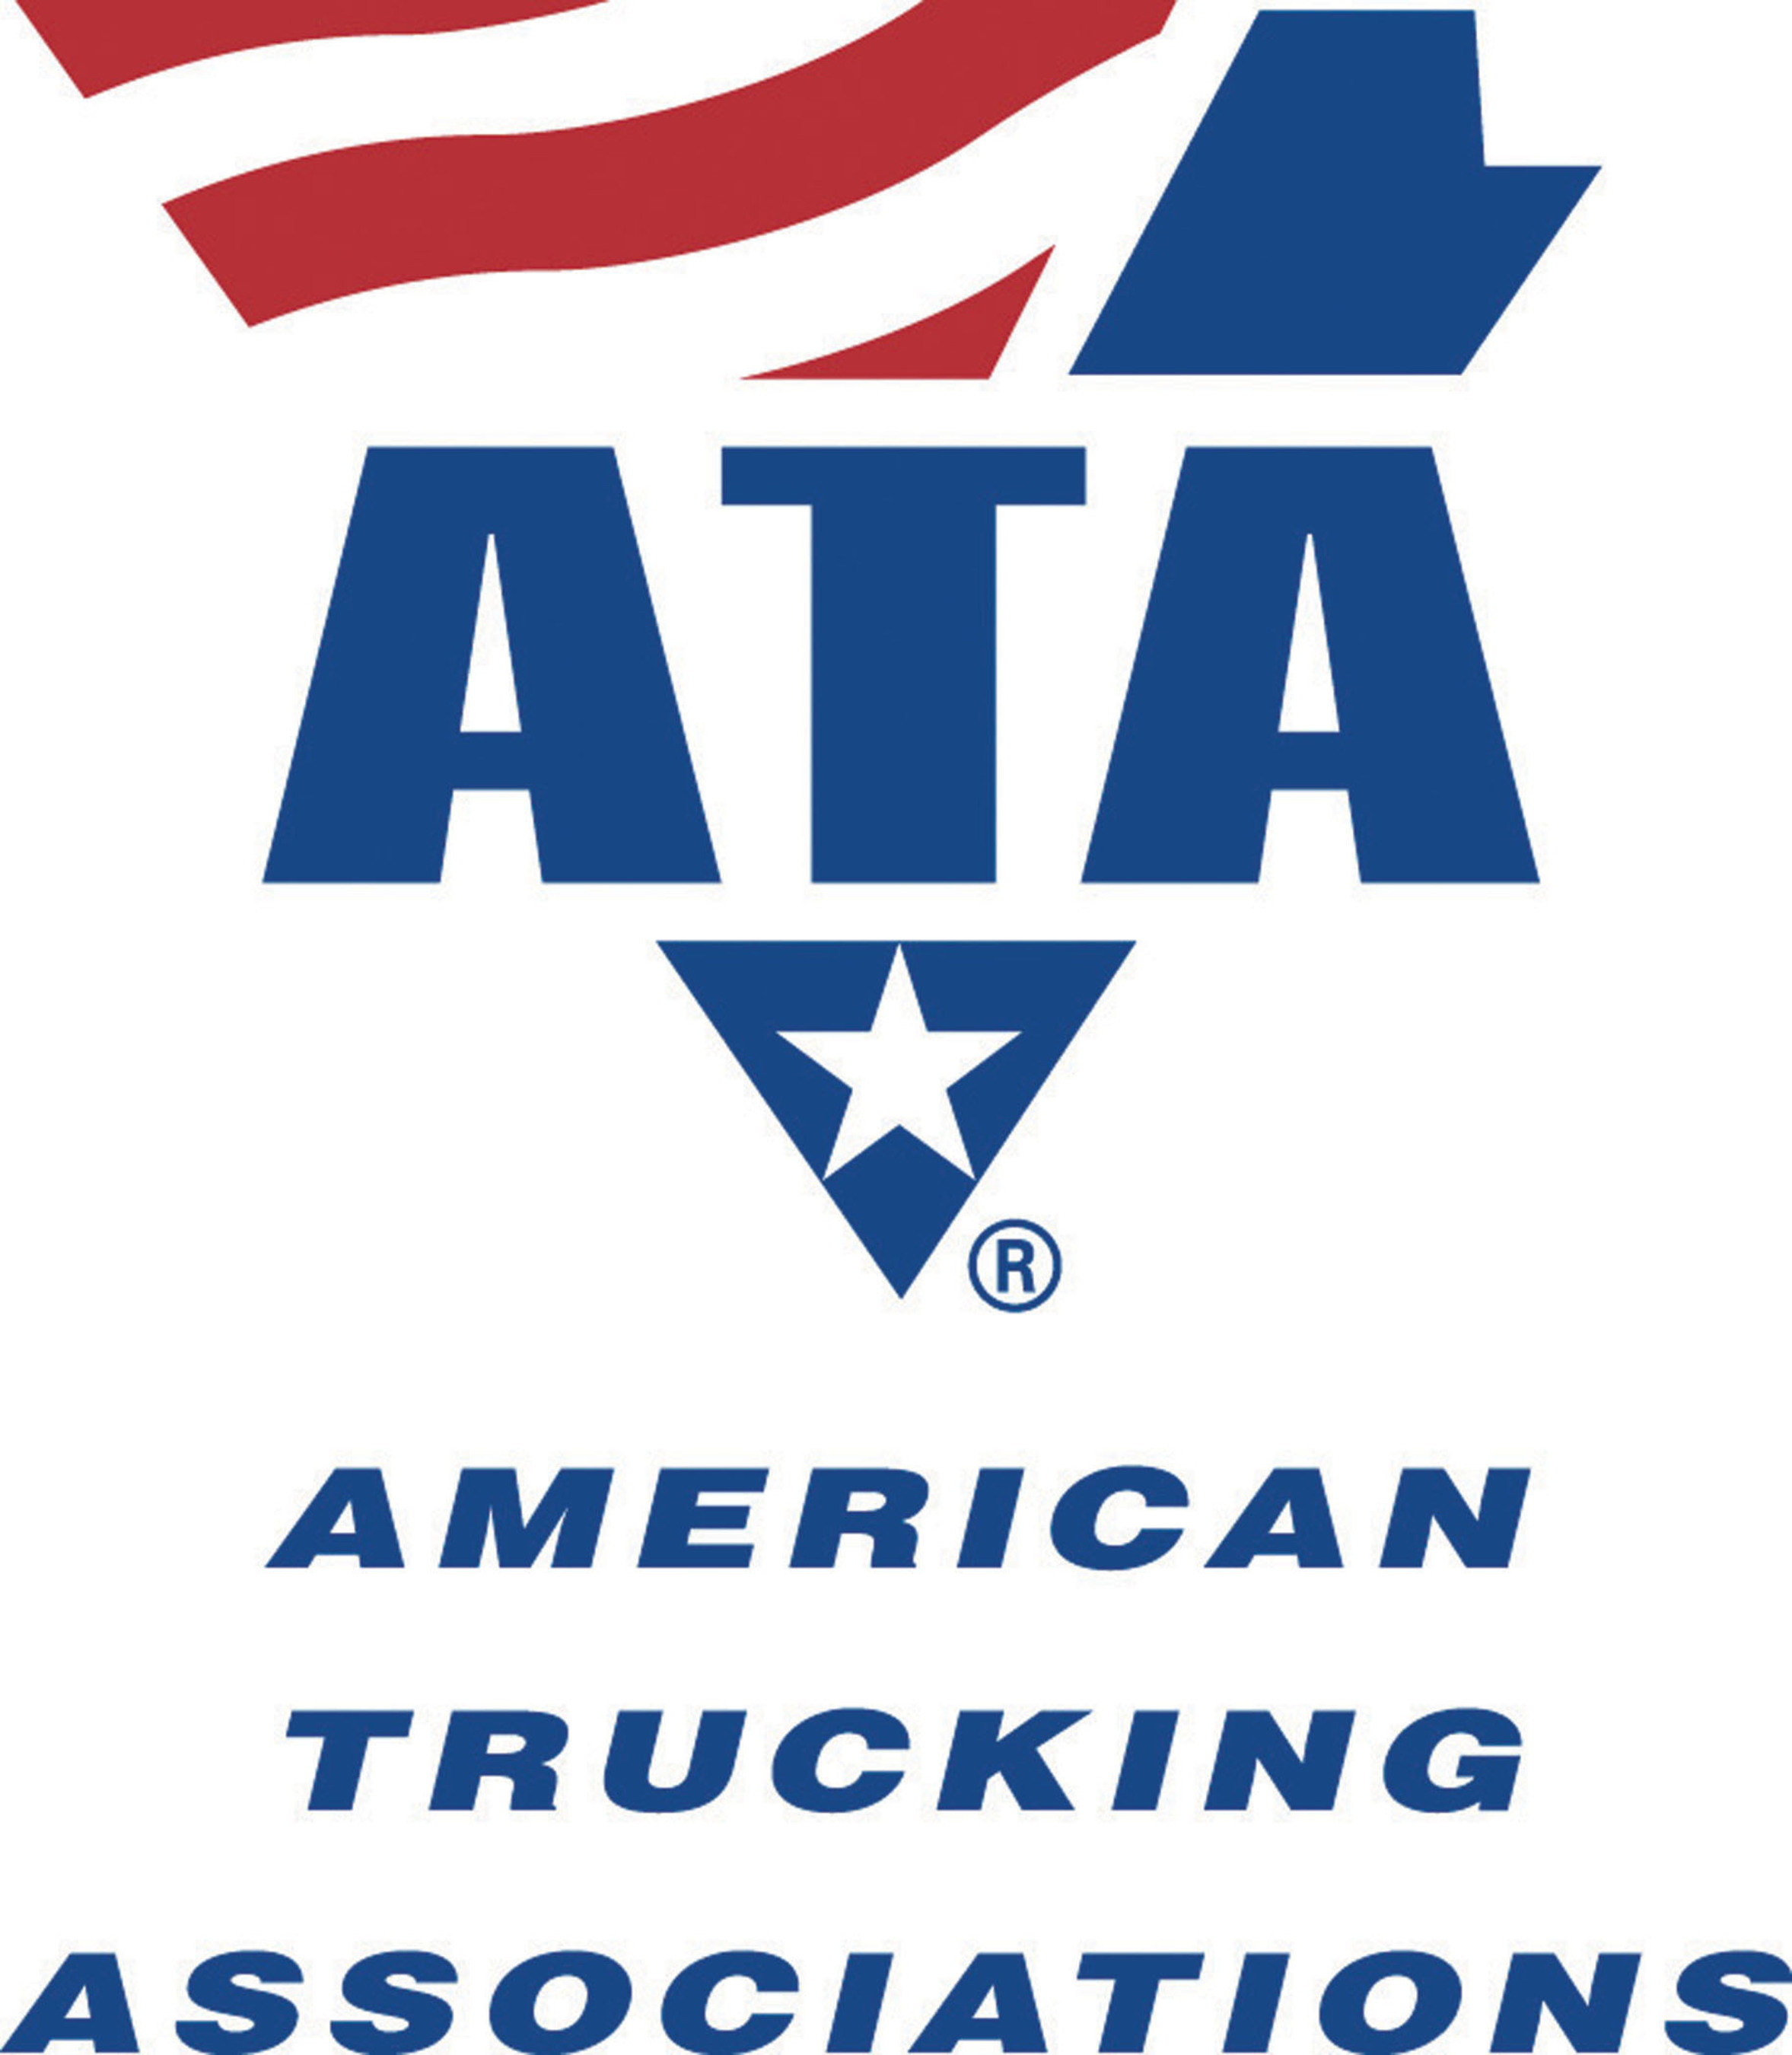 American Trucking Associations logo. (PRNewsFoto/American Trucking Associations) (PRNewsFoto/)